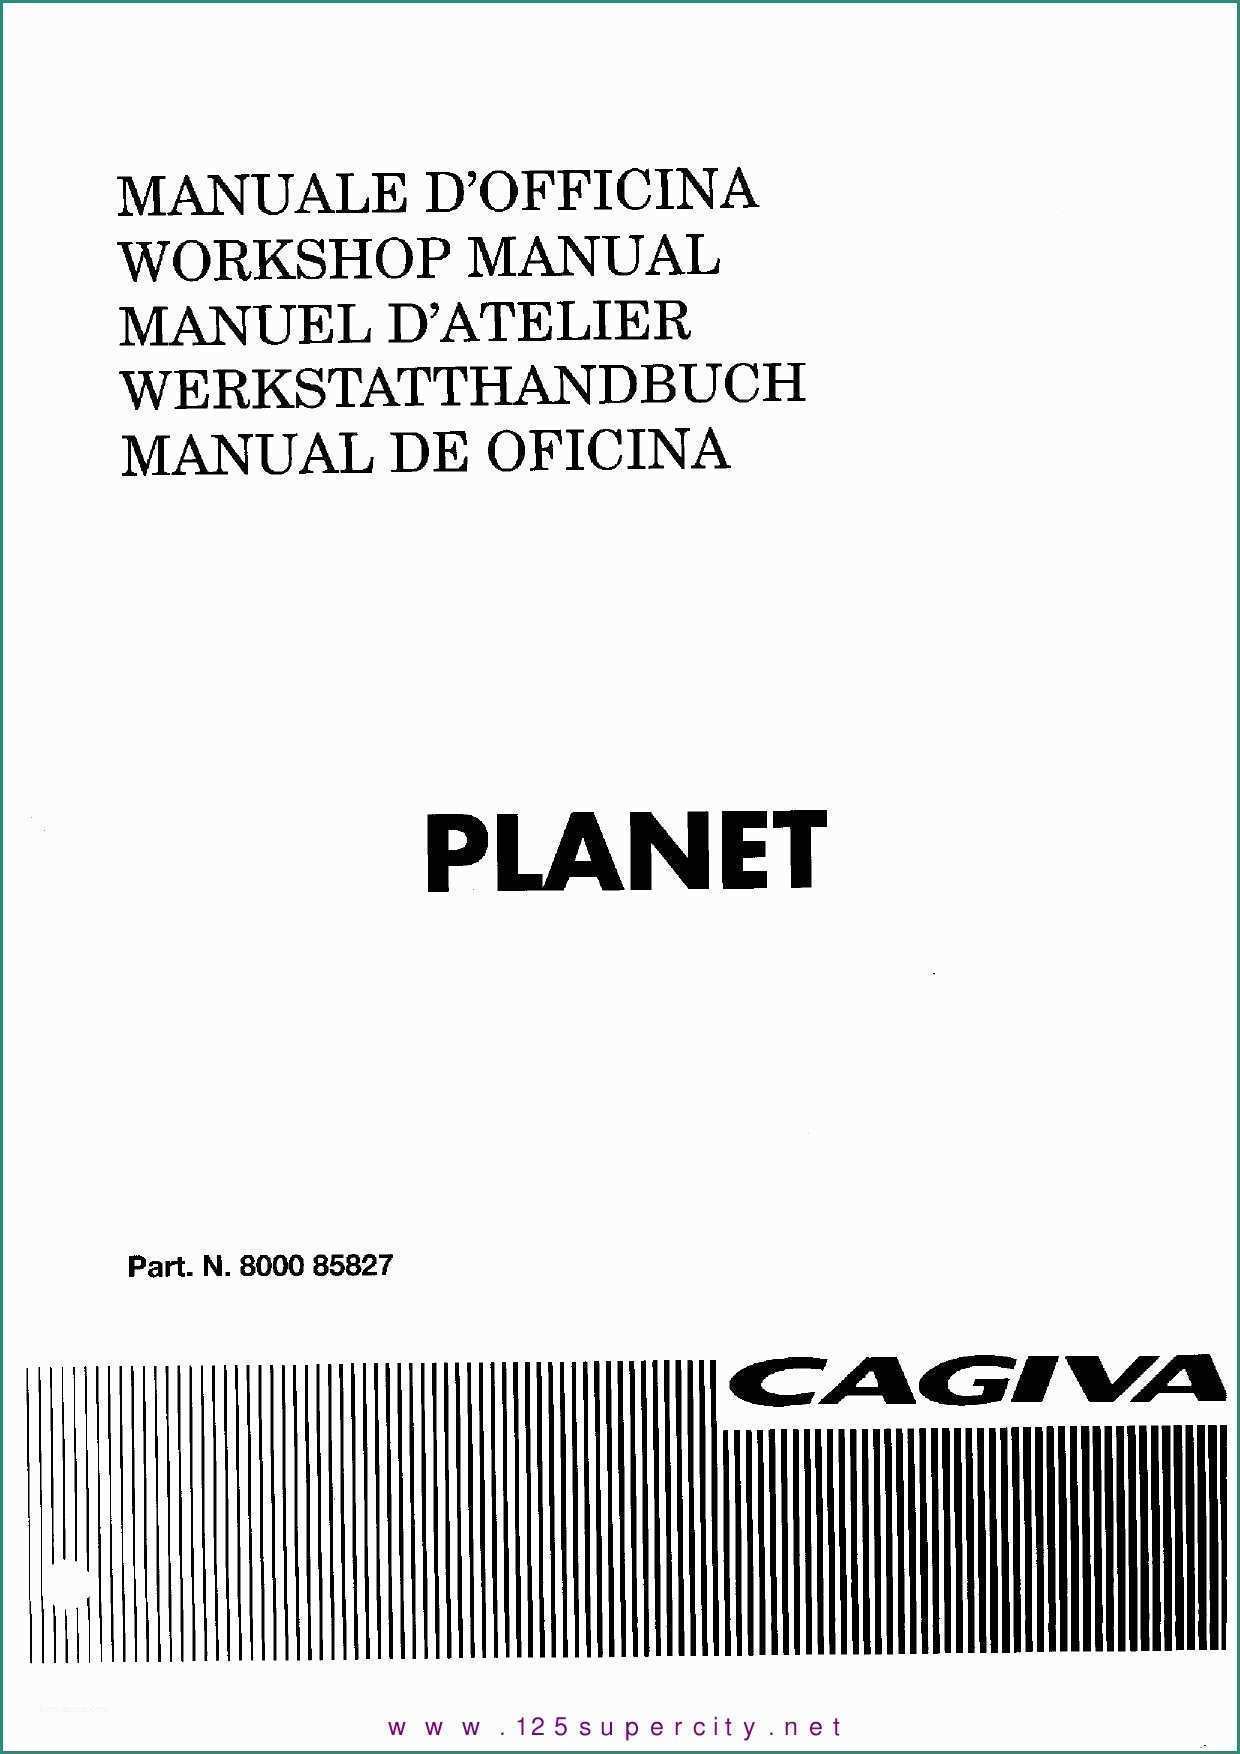 Residuo Fisso Acqua Panna E Manual Cagiva Planet by Christ Cfouq issuu